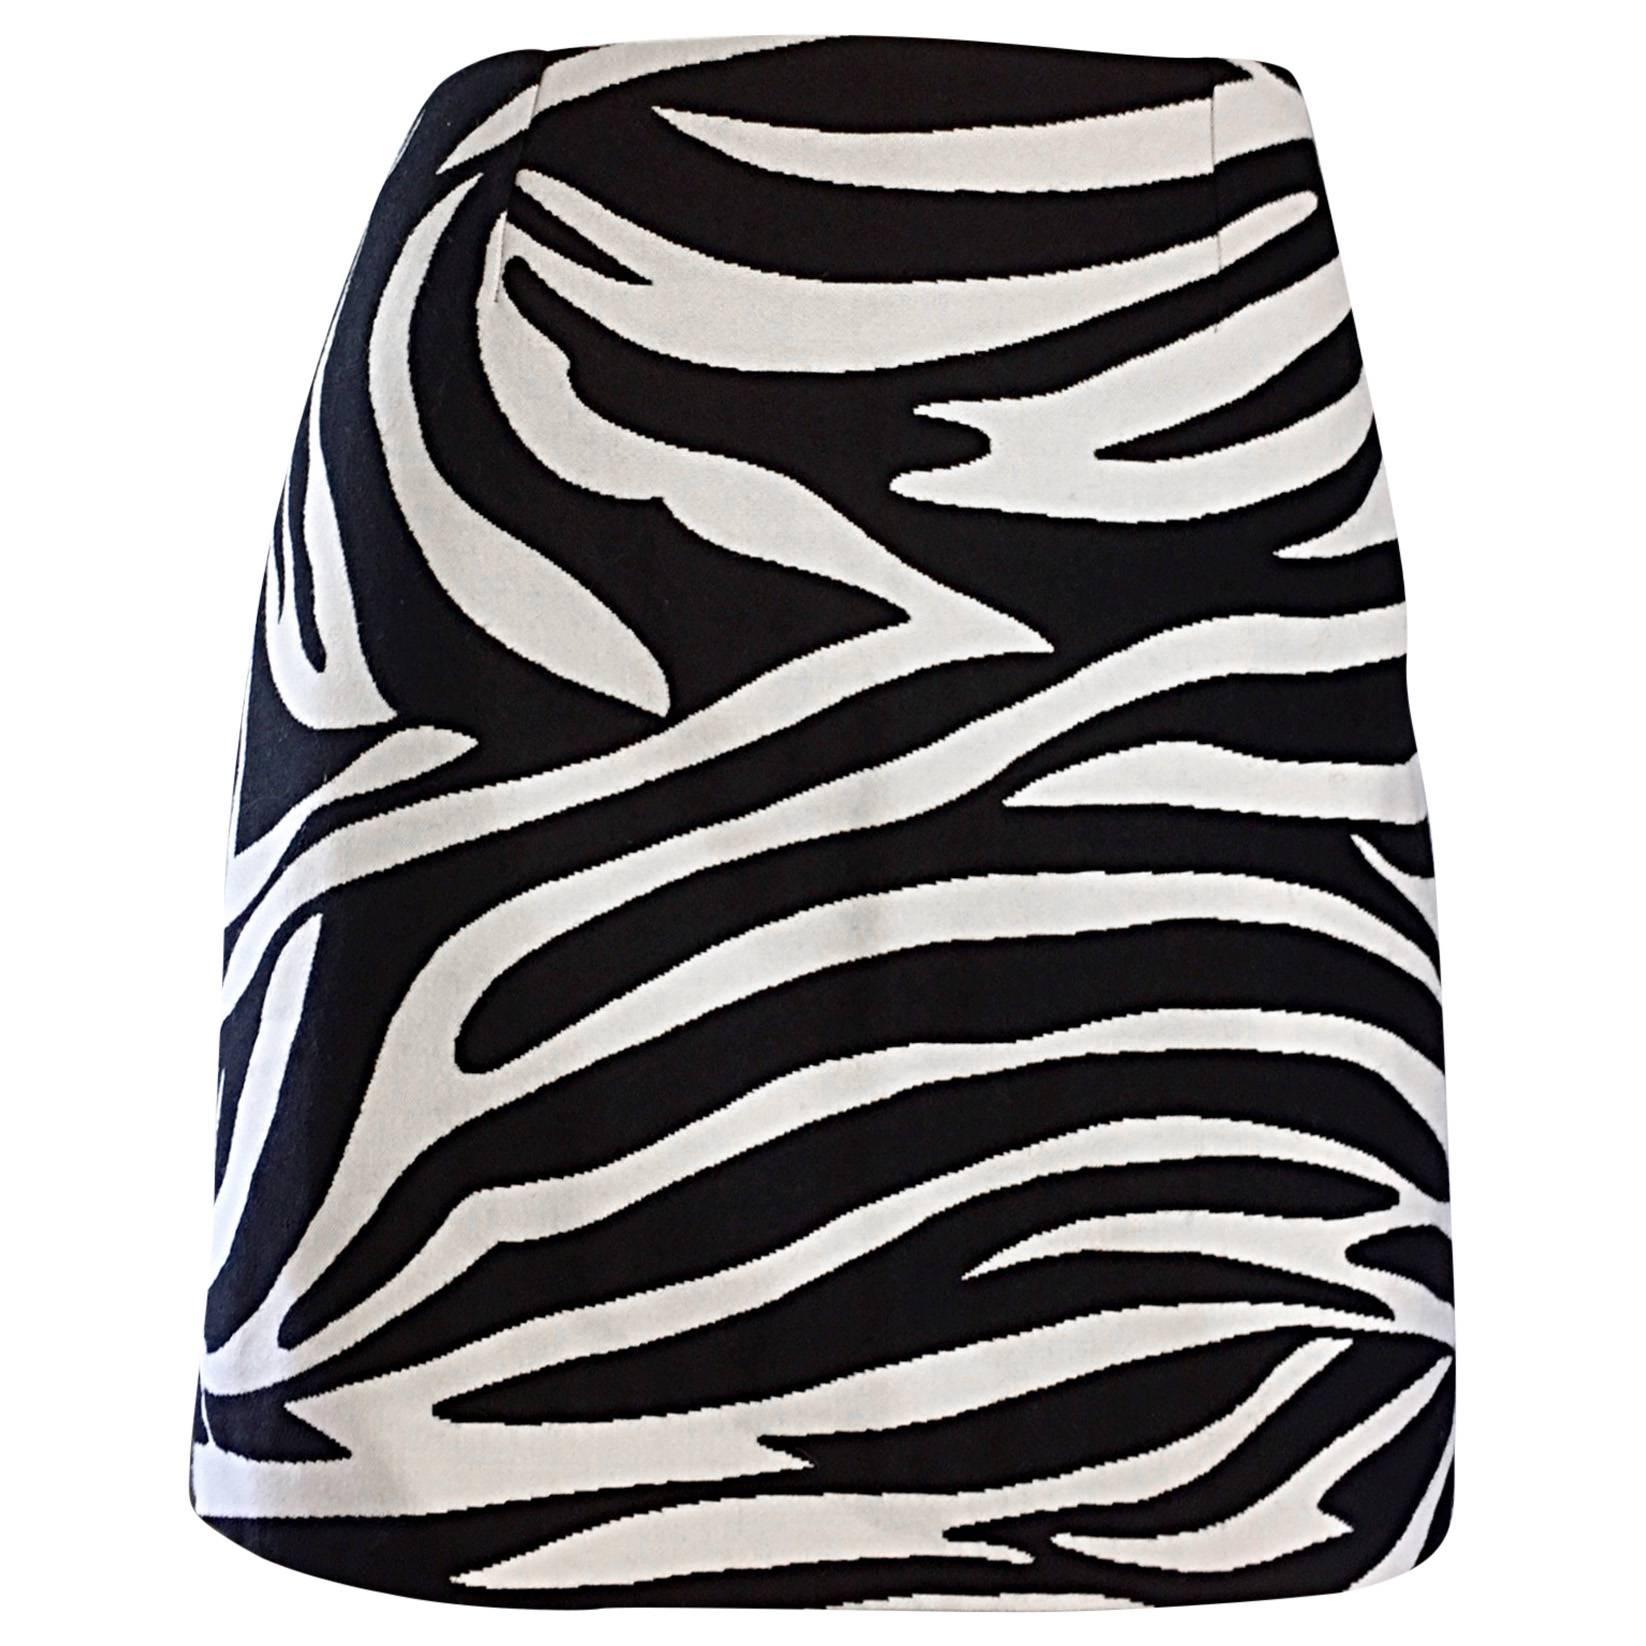 Brand New Celine by Phoebe Philo Black and White Zebra Print A - Line Mini Skirt